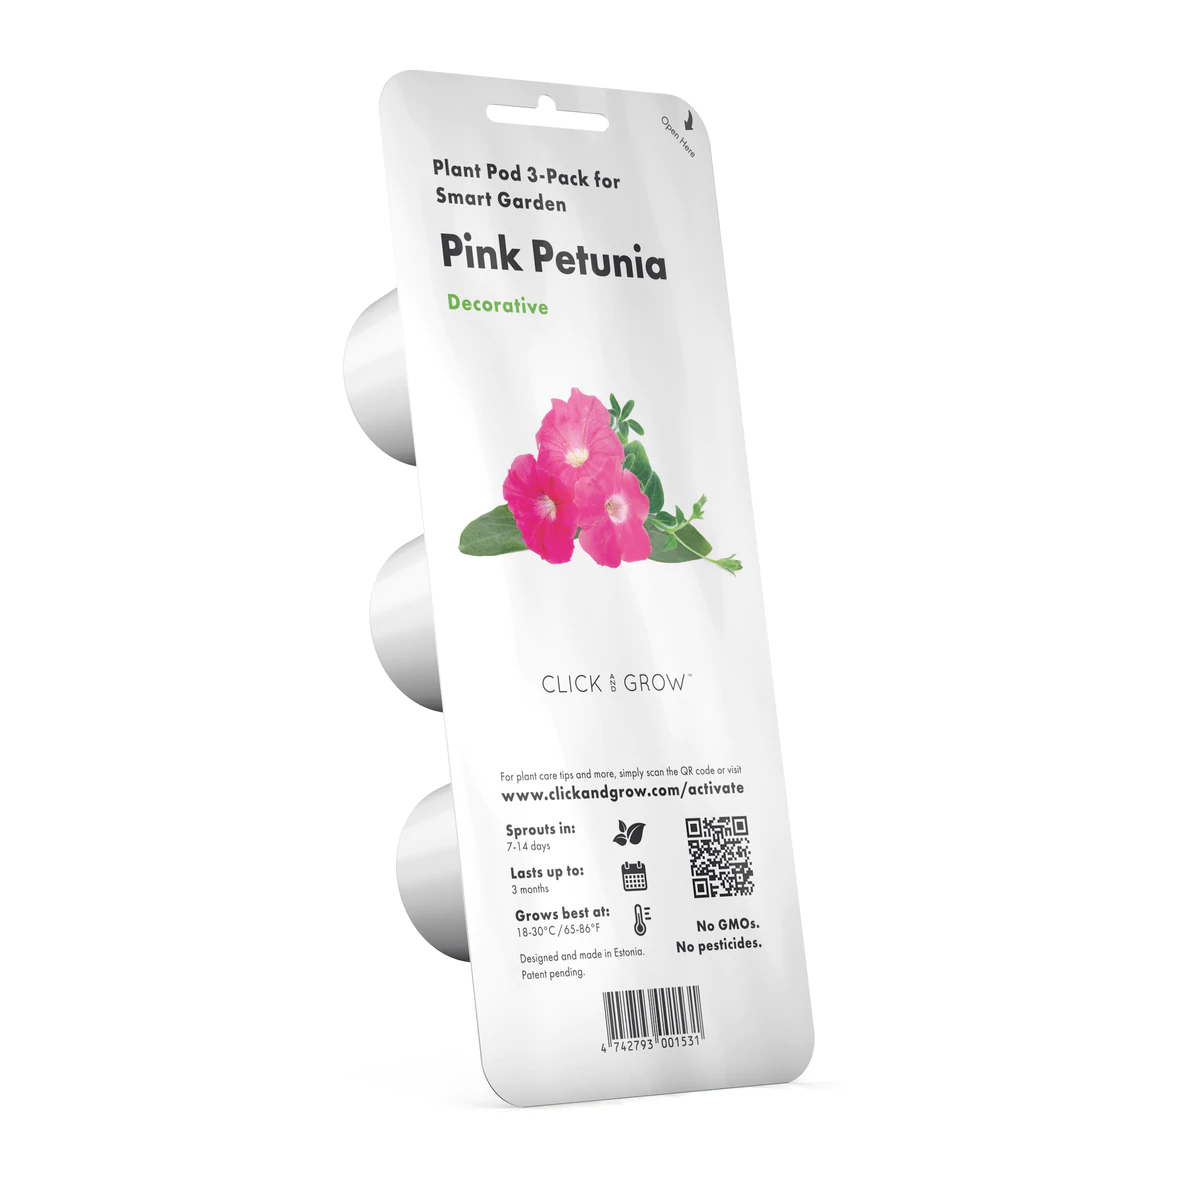 Pink Petunia Plant Pods for Smart Garden